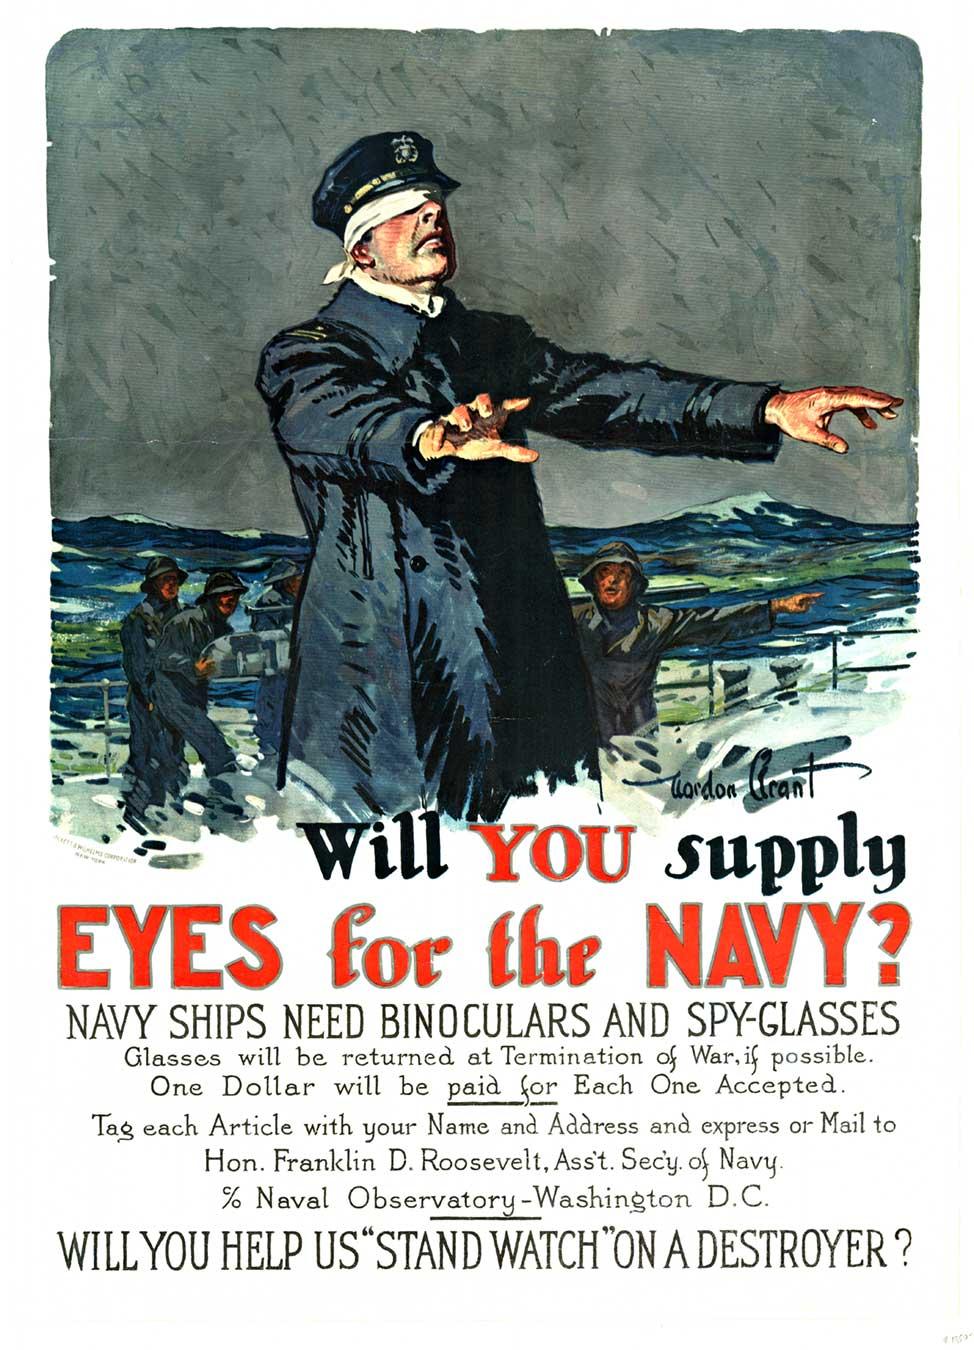 Gordon Grant Portrait Print – Originales Vintage-Poster „Will You Supply Eyes for the Navy?“ amerikanisches Militärplakat